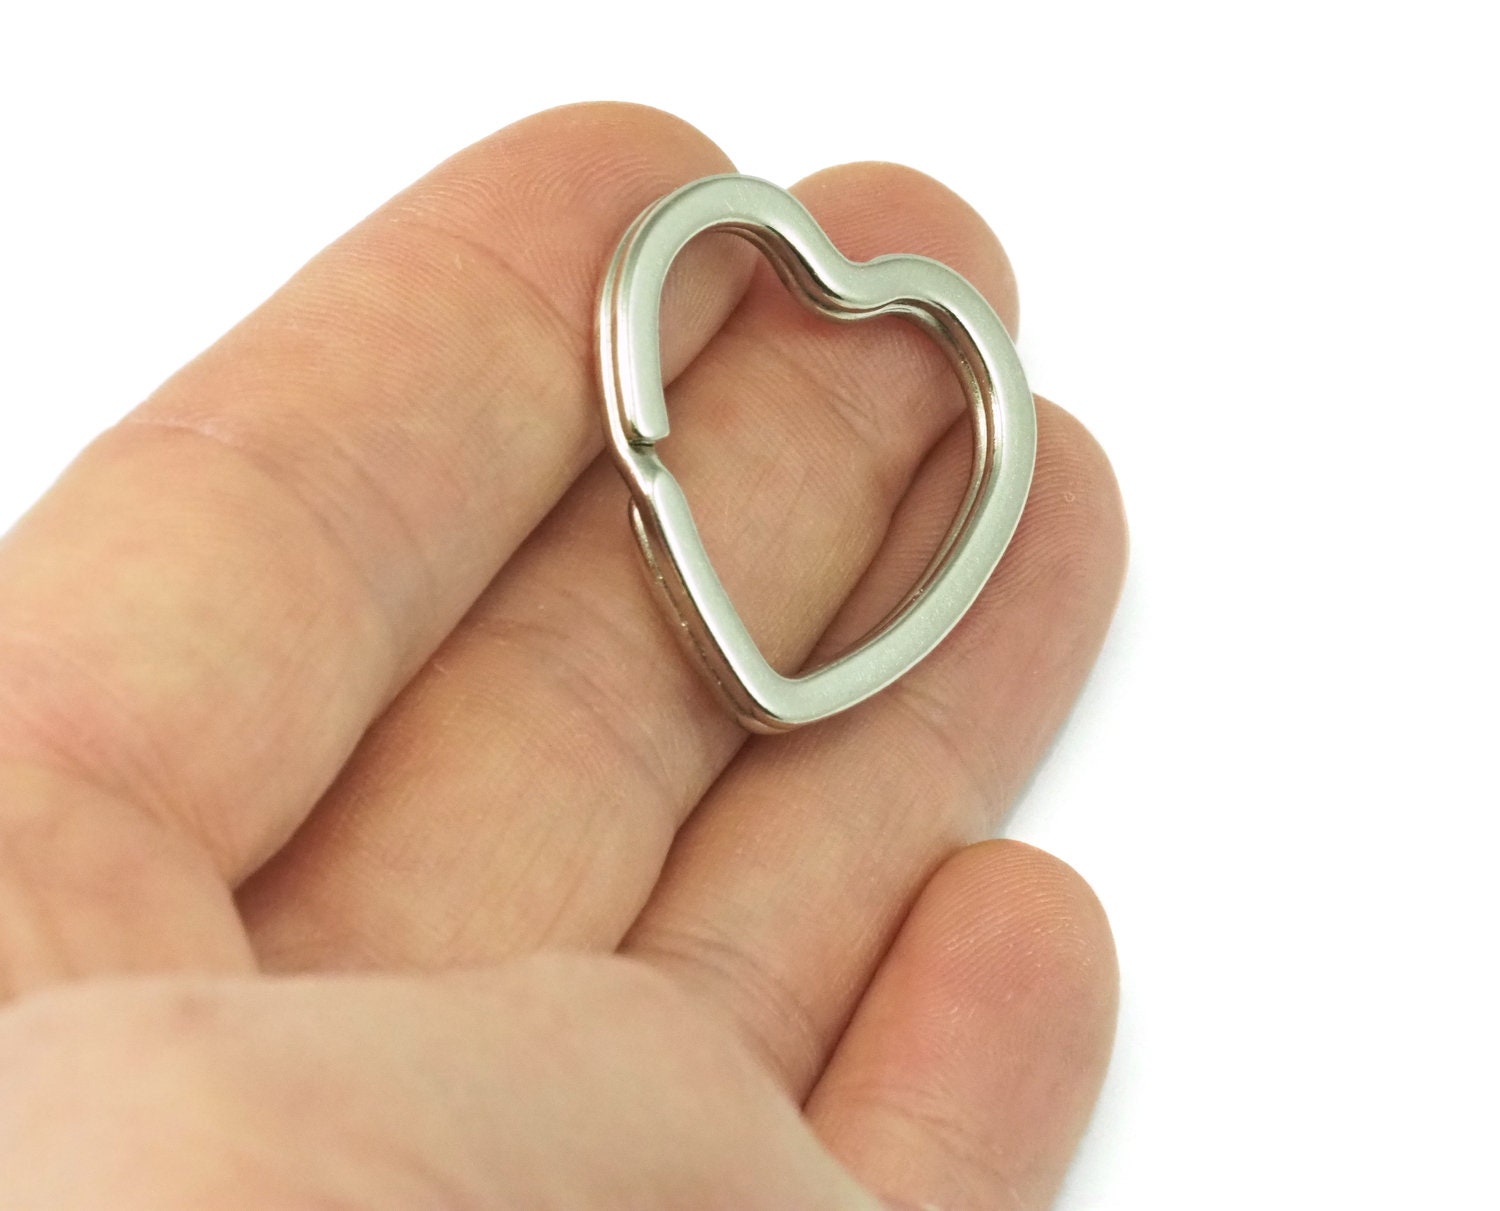 TIFFANY & CO - Elsa Peretti - Open Heart Key Ring - Sterling Silver .925  £40.00 - PicClick UK